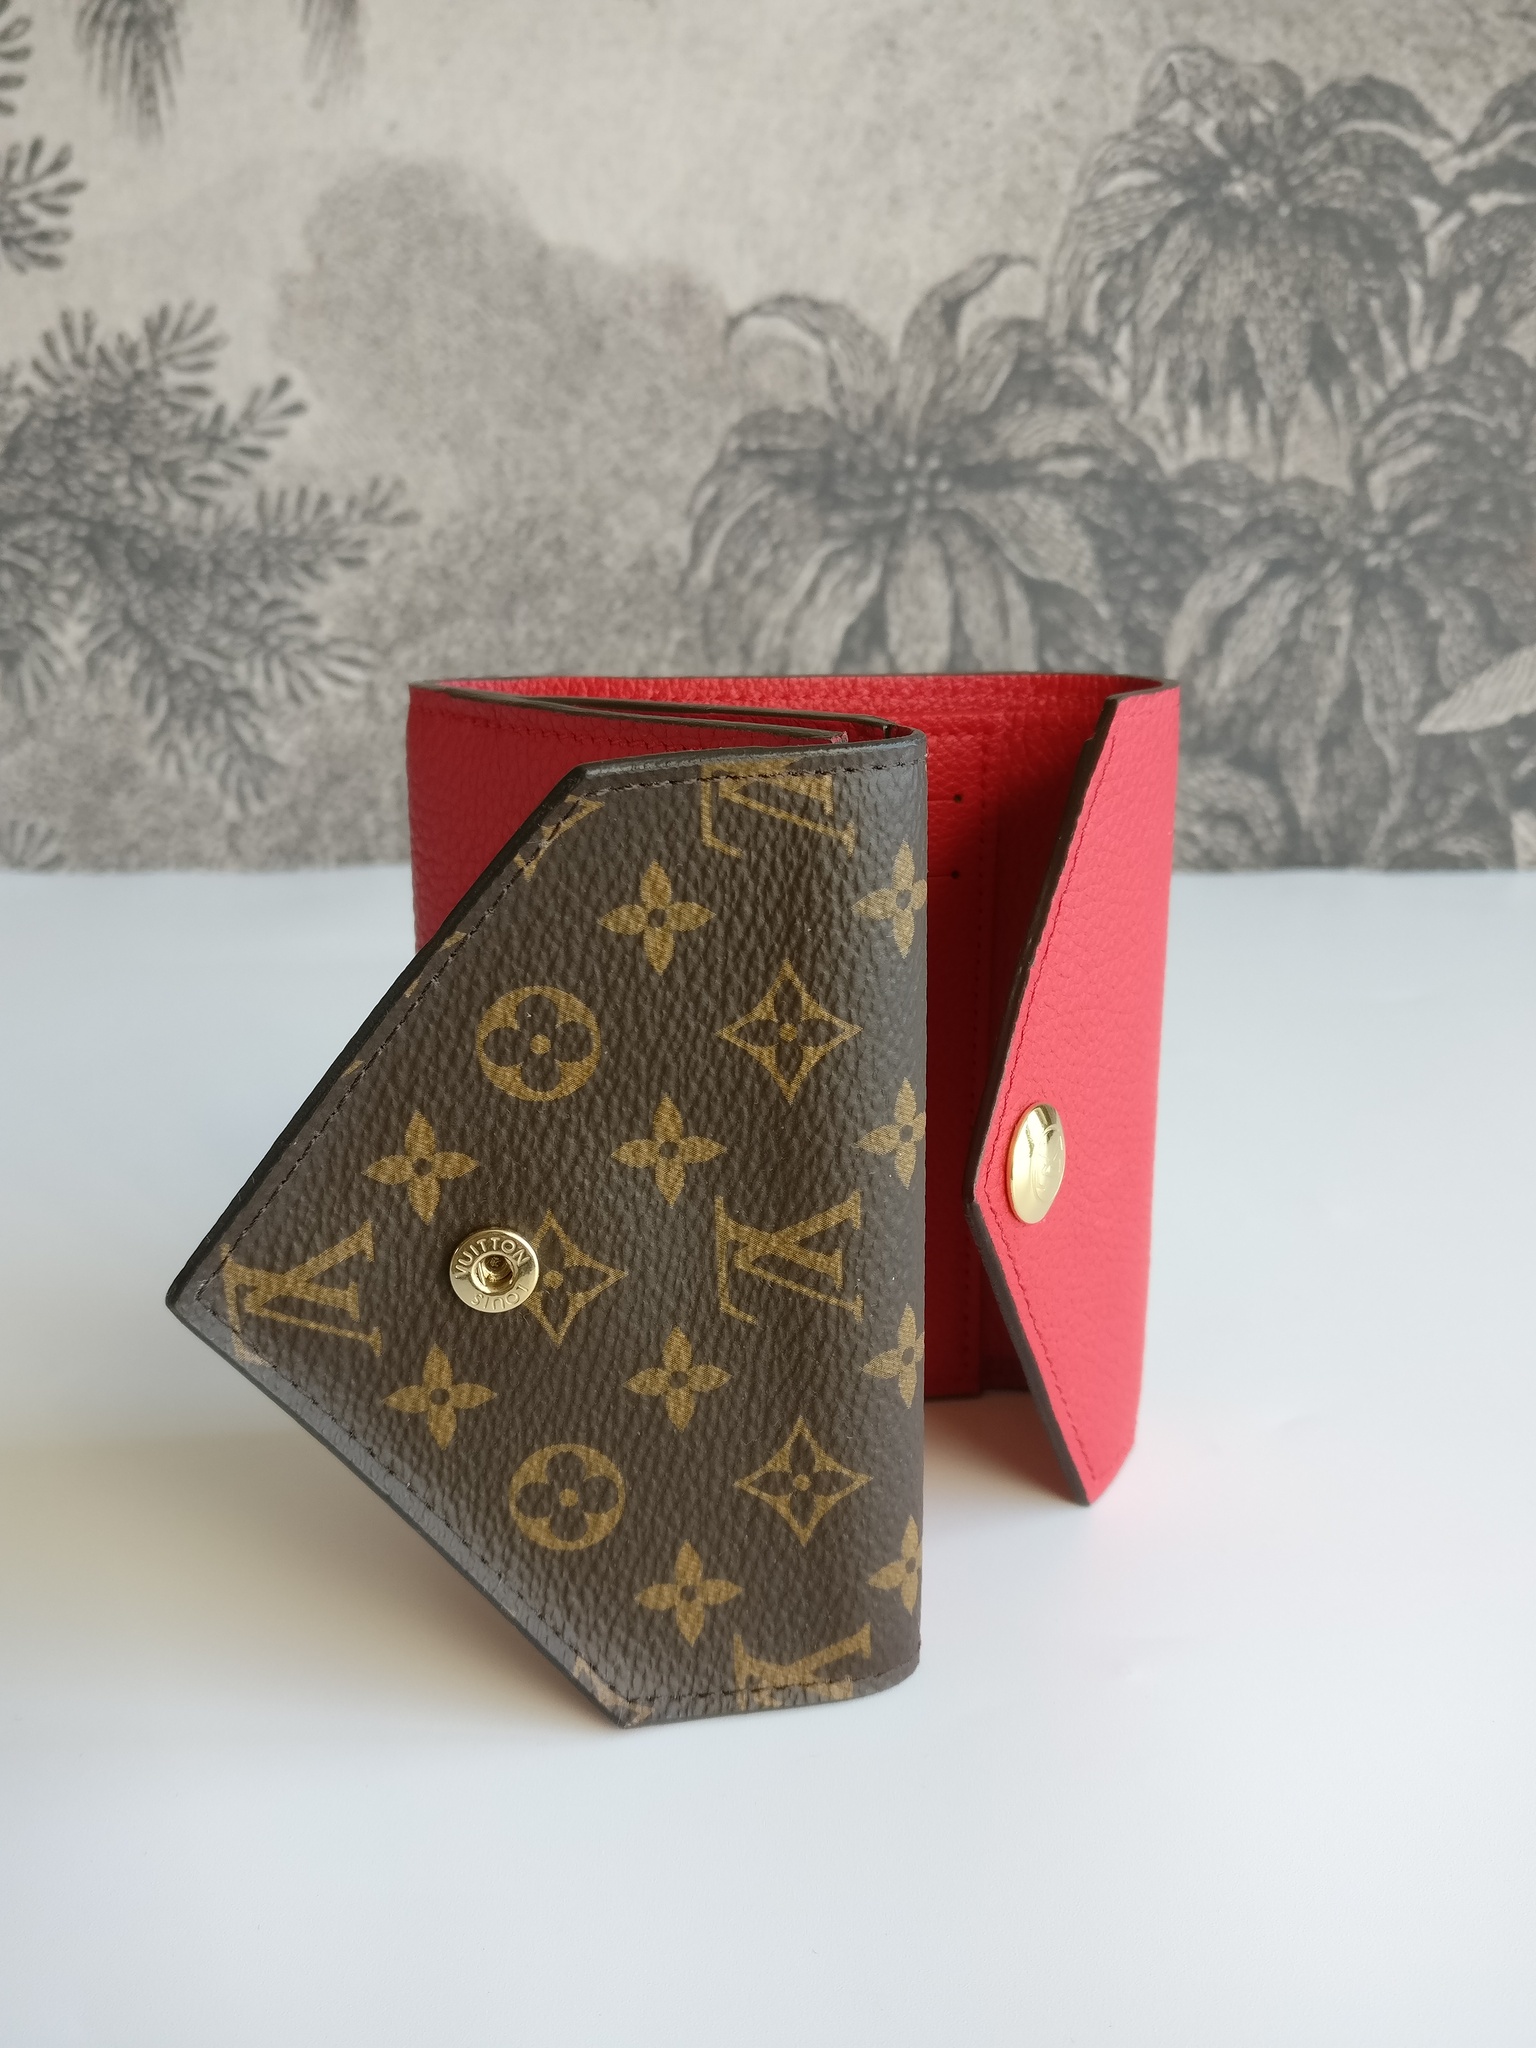 Louis Vuitton Double V compact wallet Rubion